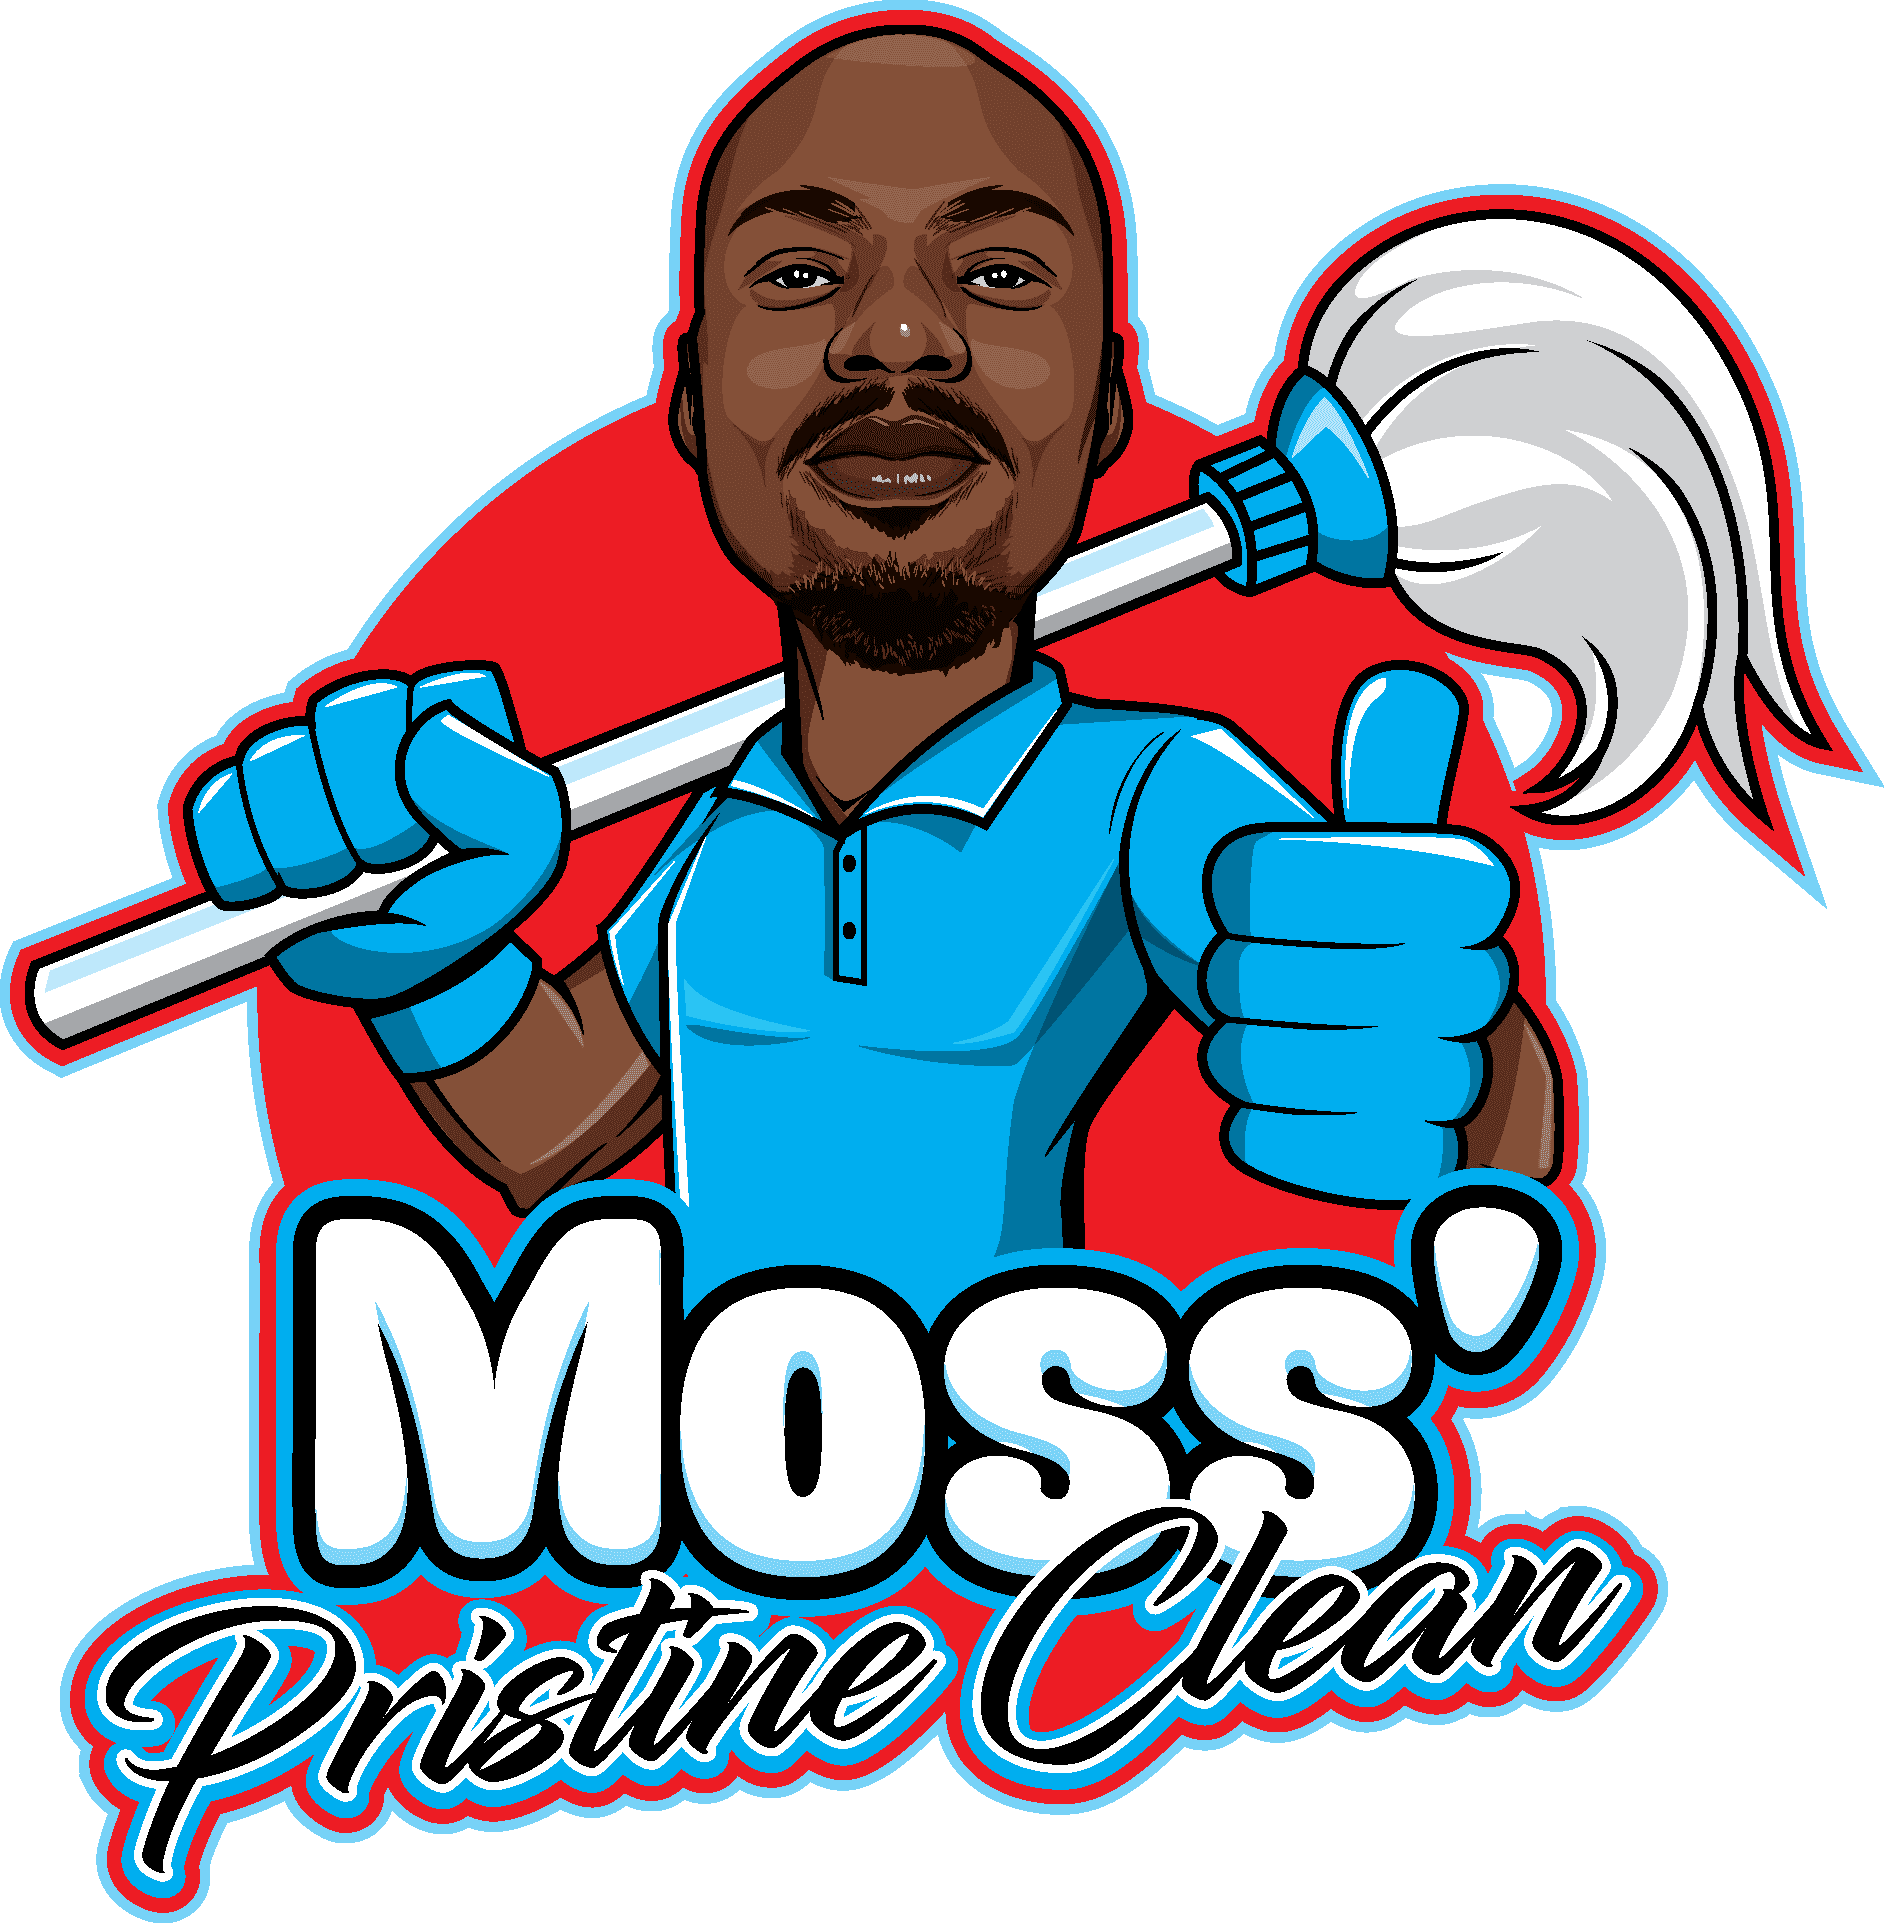 Moss’ Pristine Clean